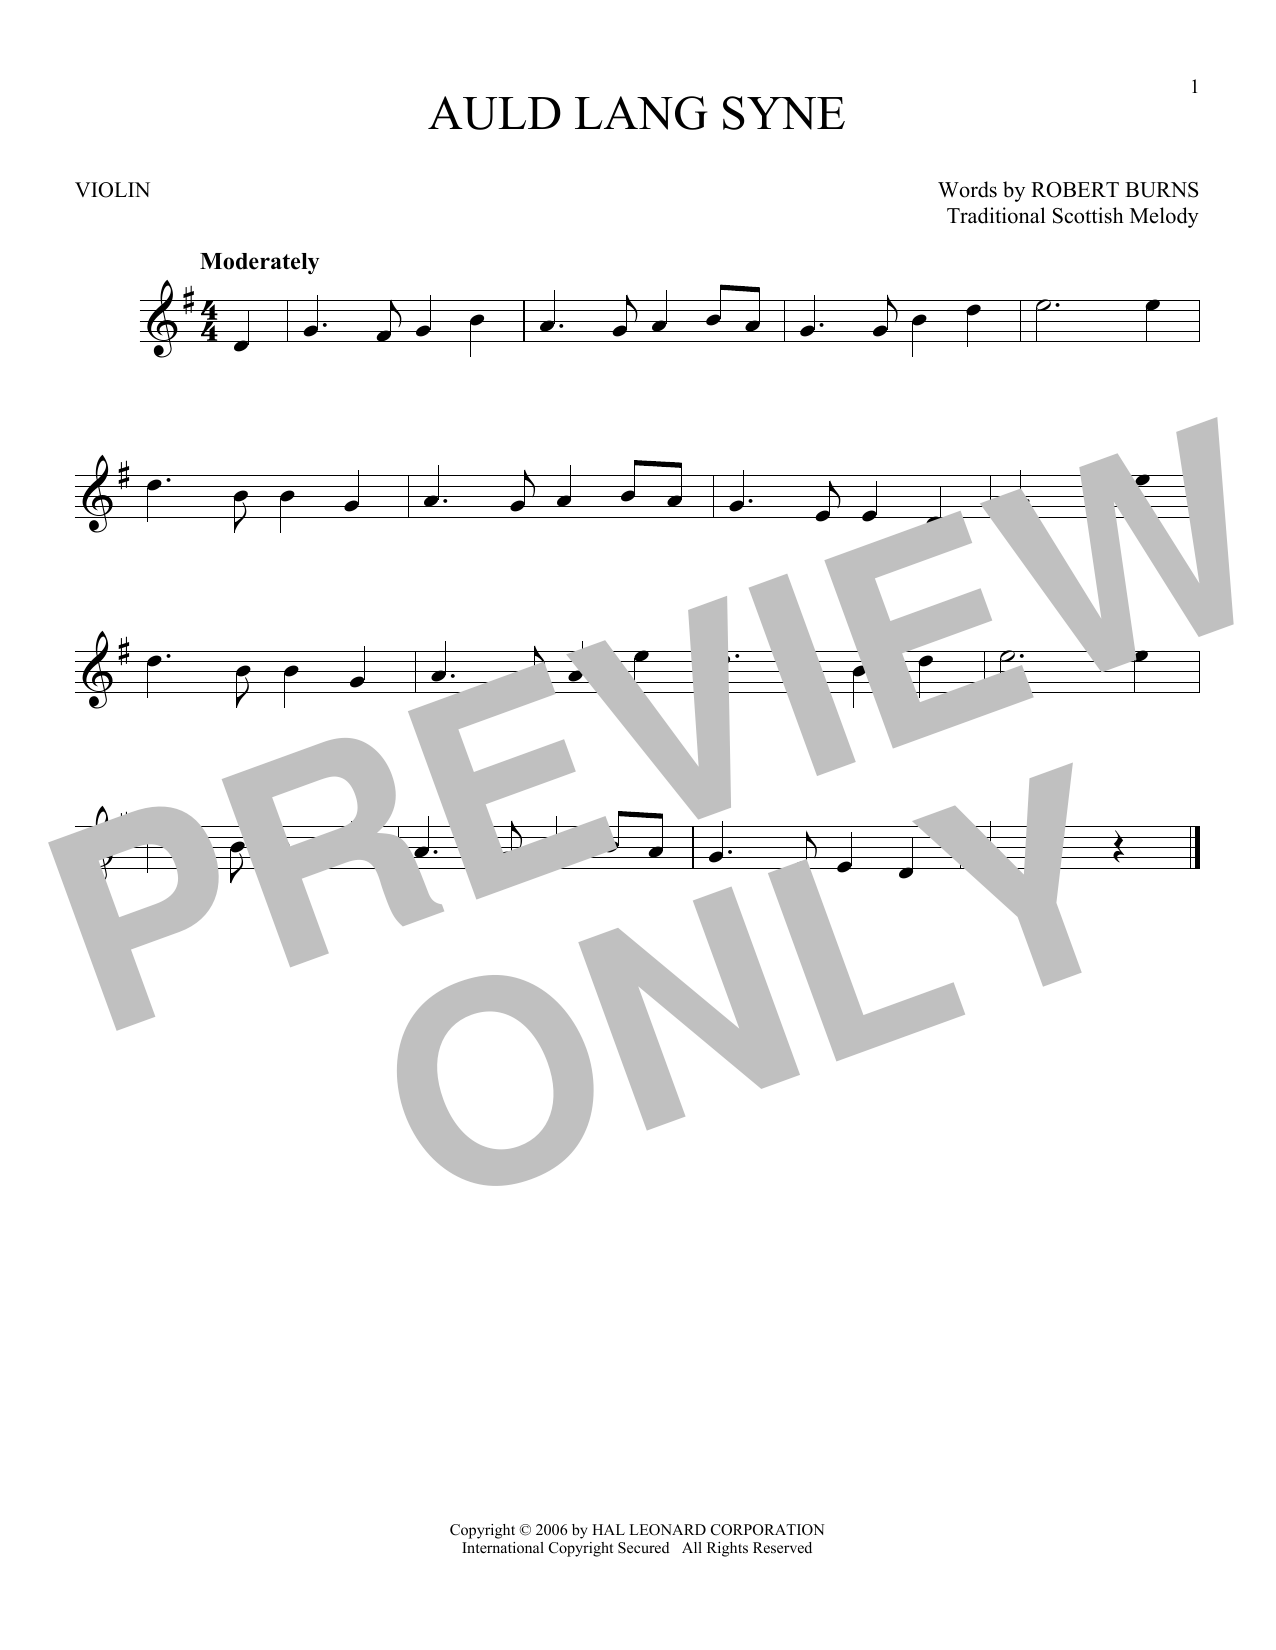 Traditional Scottish Melody Auld Lang Syne sheet music notes and chords arranged for Baritone Ukulele